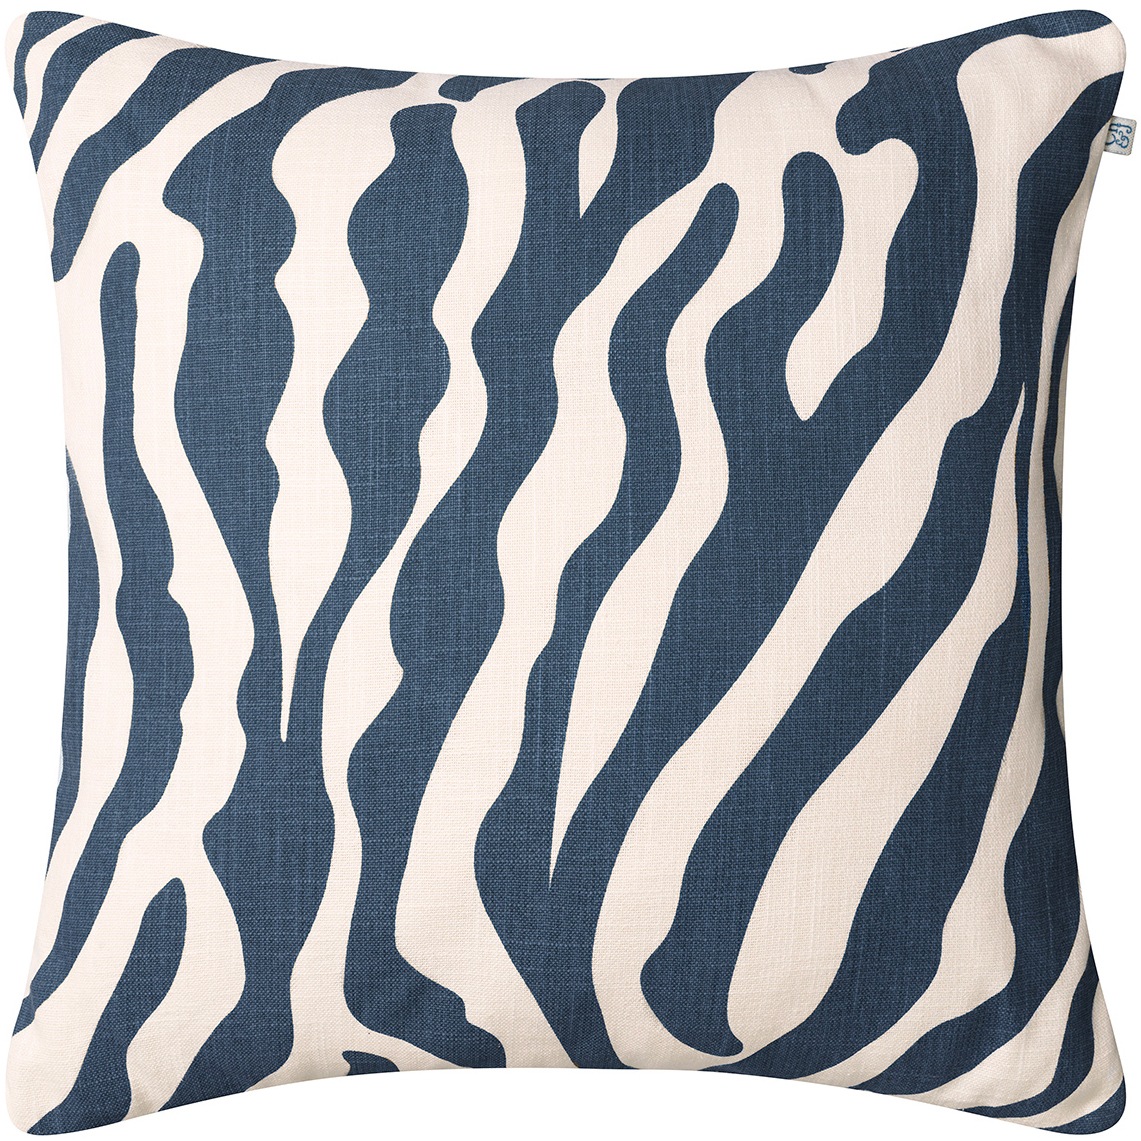 Zebra Cushion 50x50 cm Outdoor, Blue / Off-white